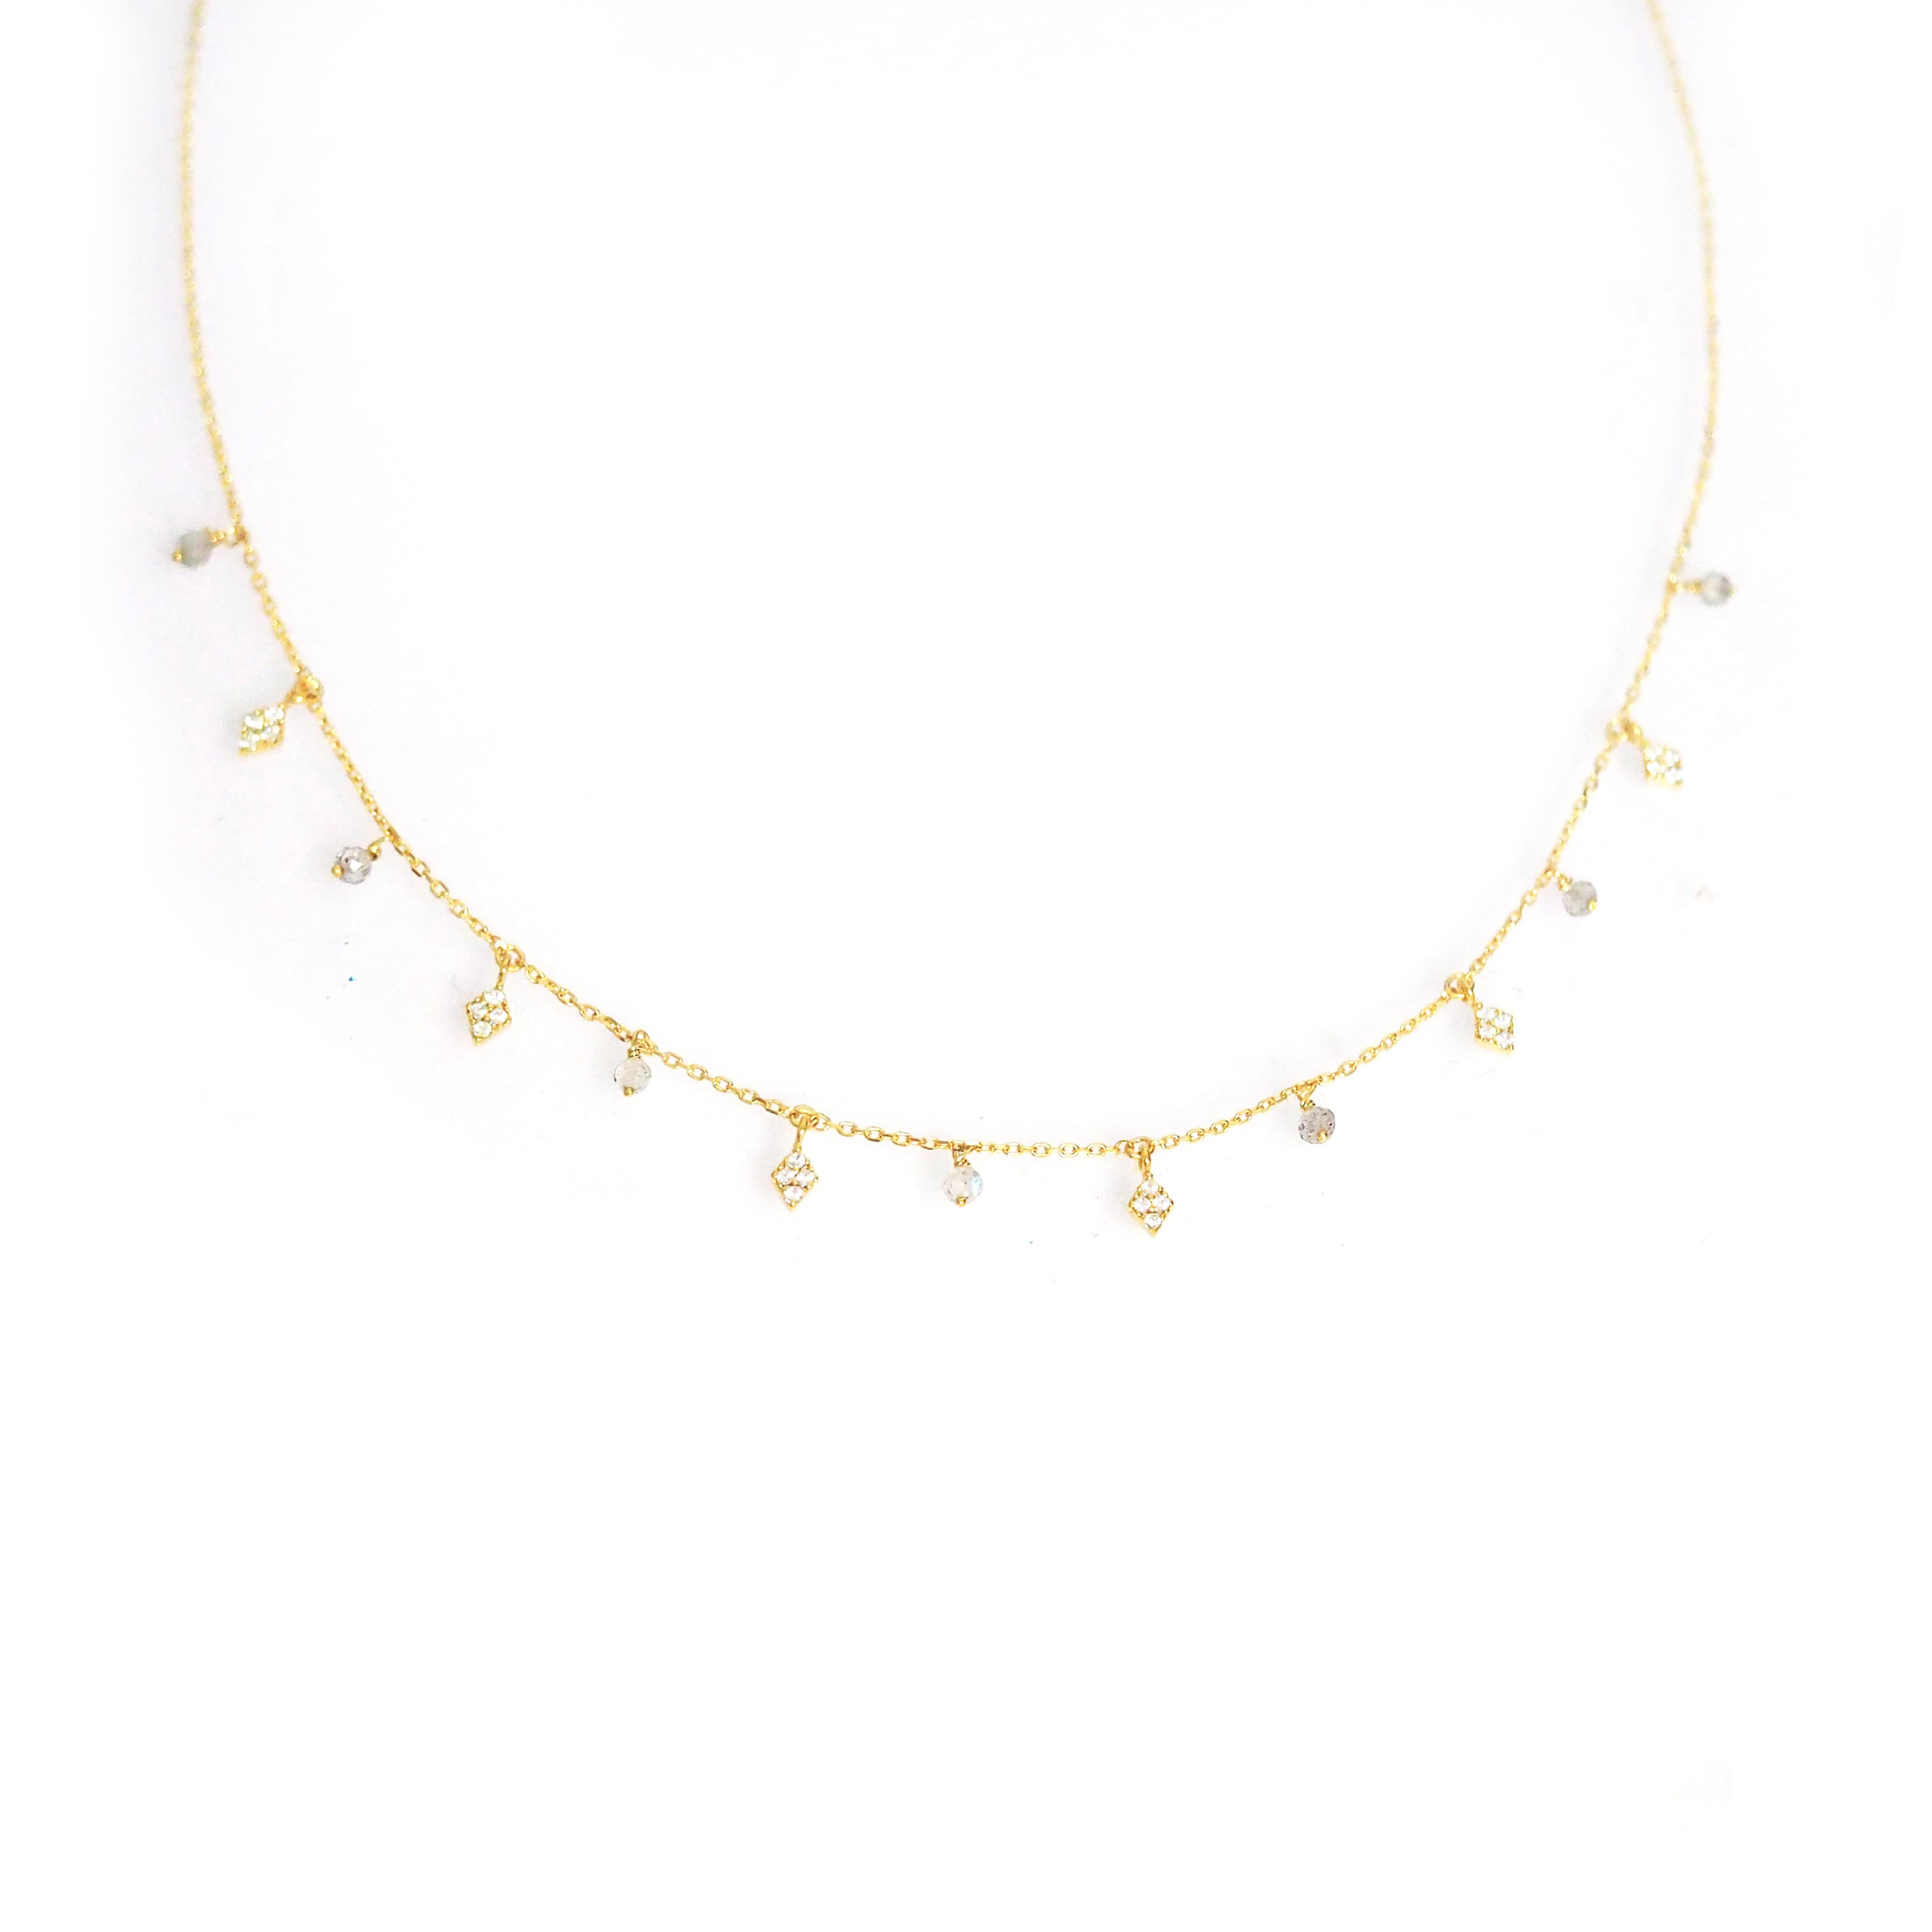 TAI JEWELRY Necklace Gold Vermeil Chain Choker W Labradorite & Cz Dangles